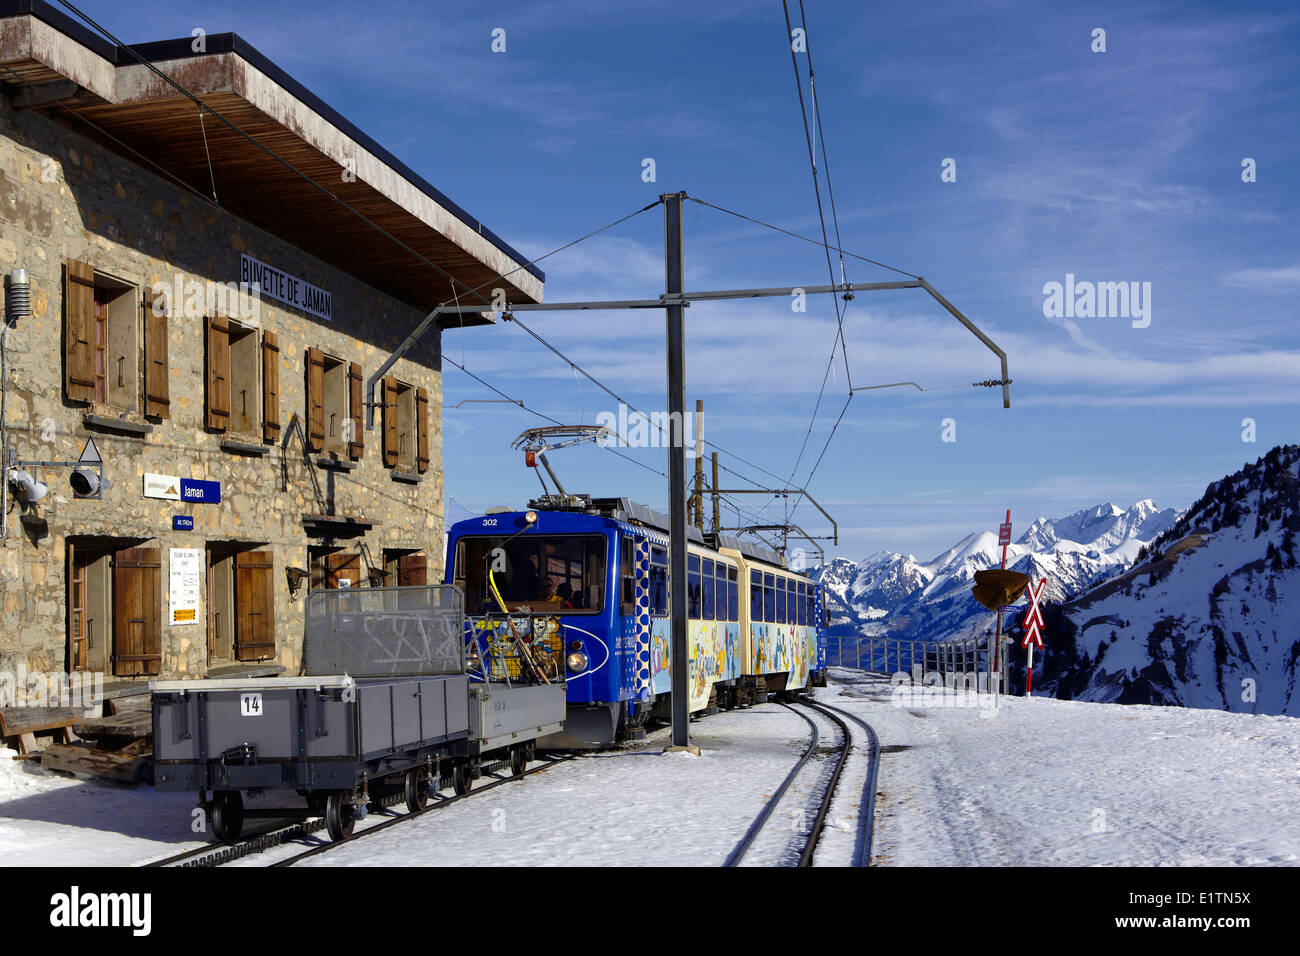 Europe, Switzerland, Vaud canton, Jaman station, rack railway Stock Photo